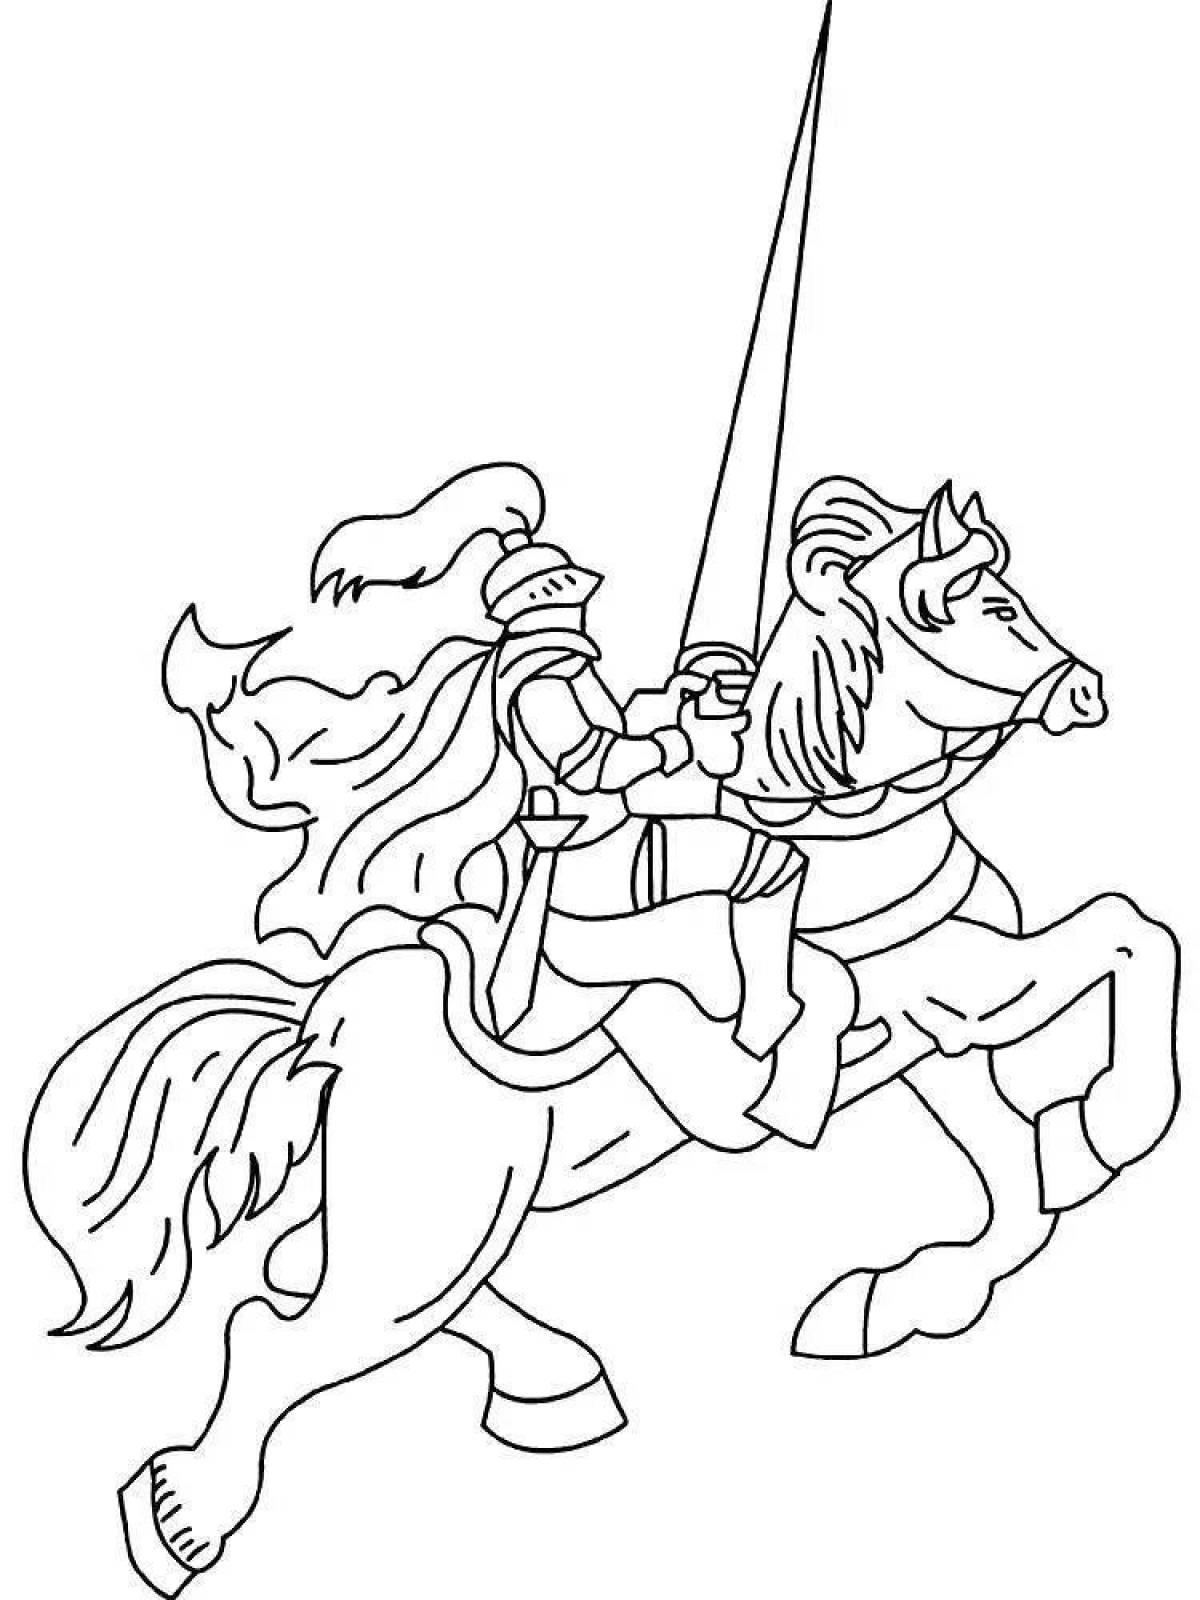 Dashing coloring knight on horseback